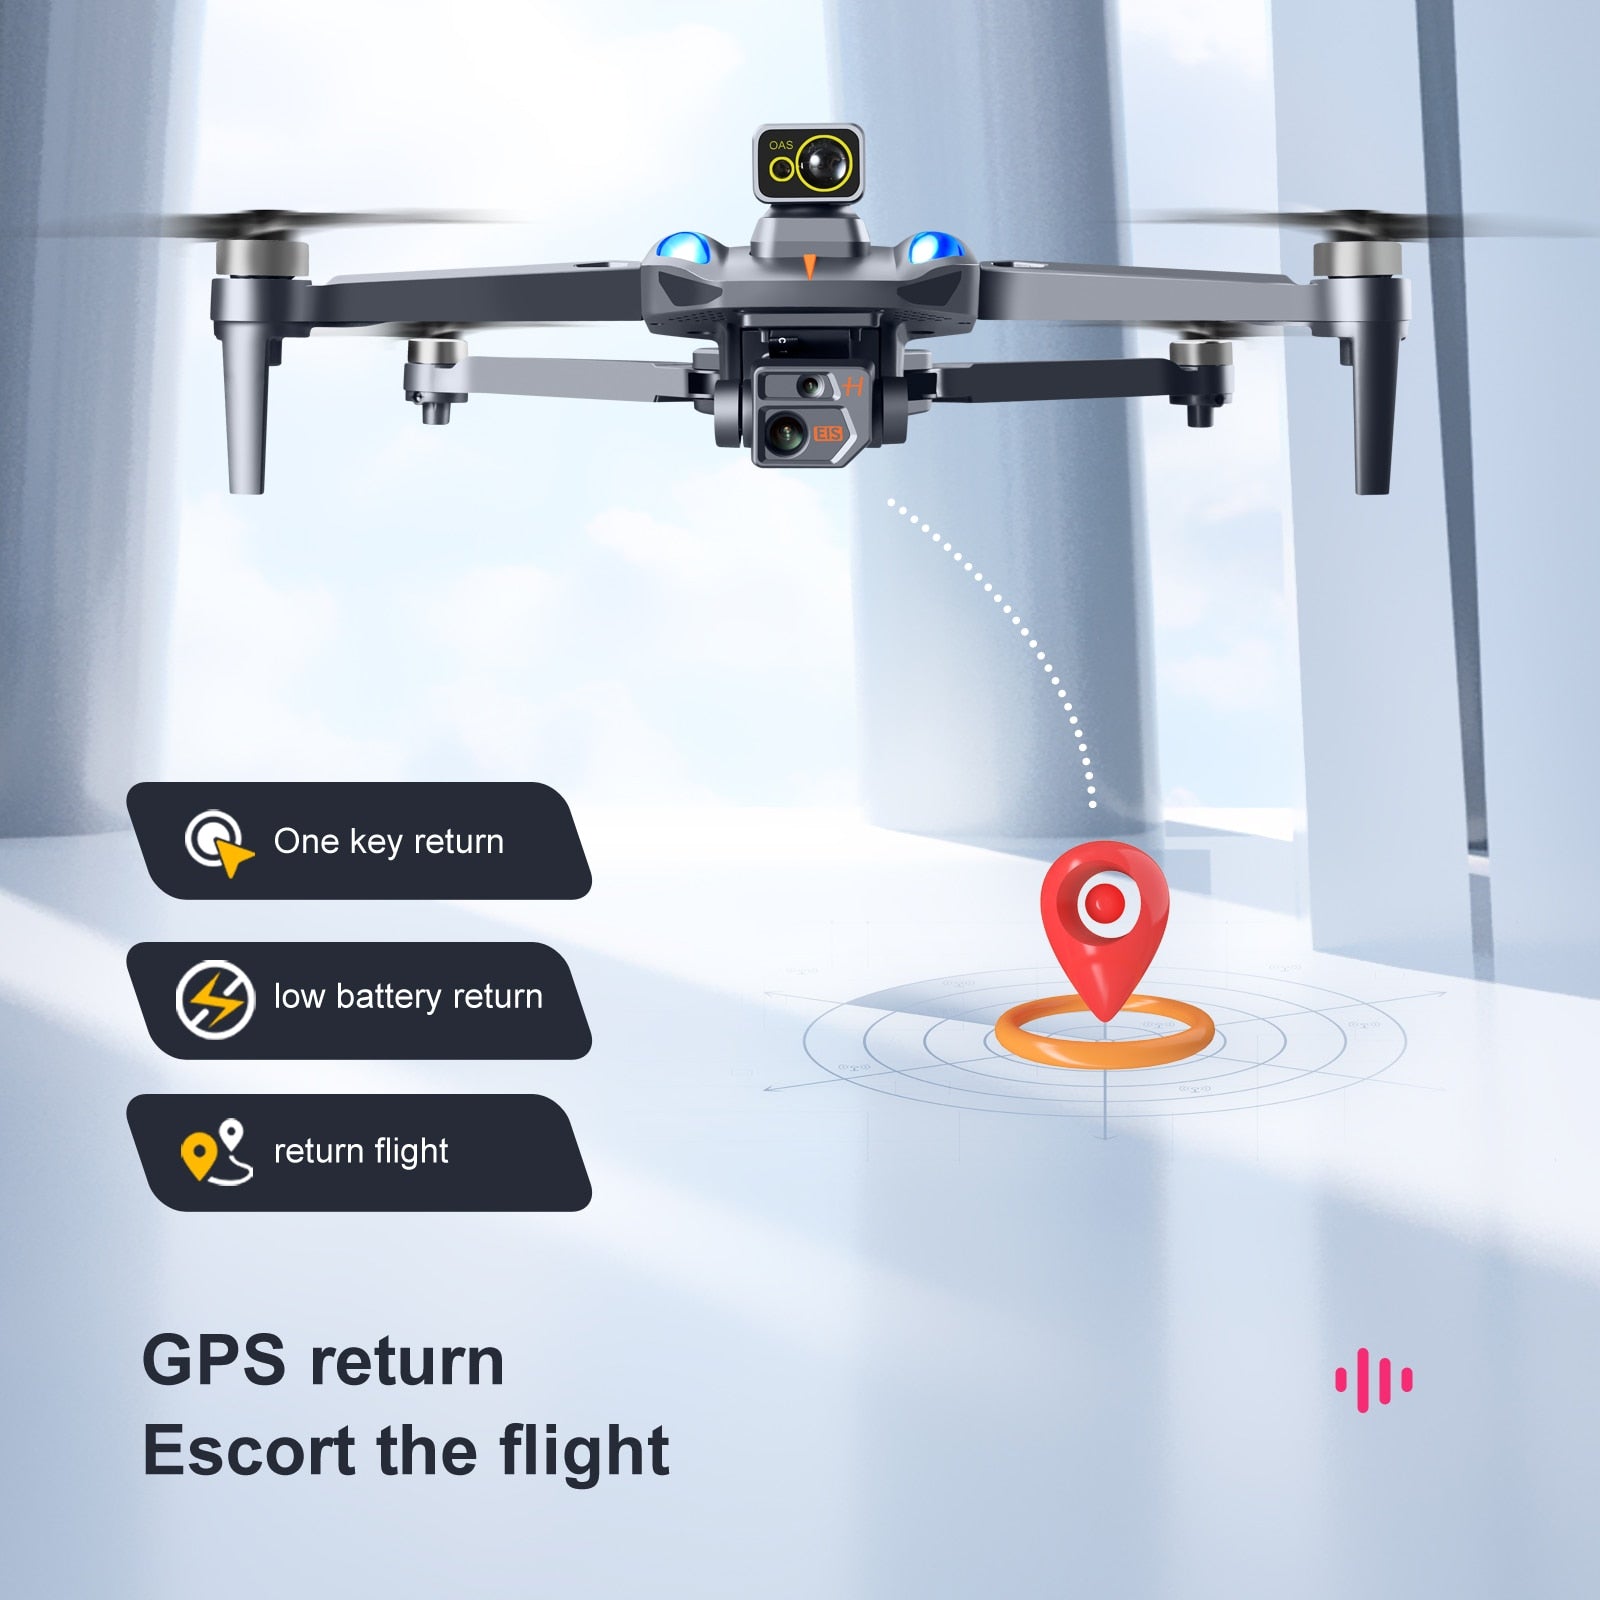 GPS Drone 4K Professional Evita gli ostacoli 8K